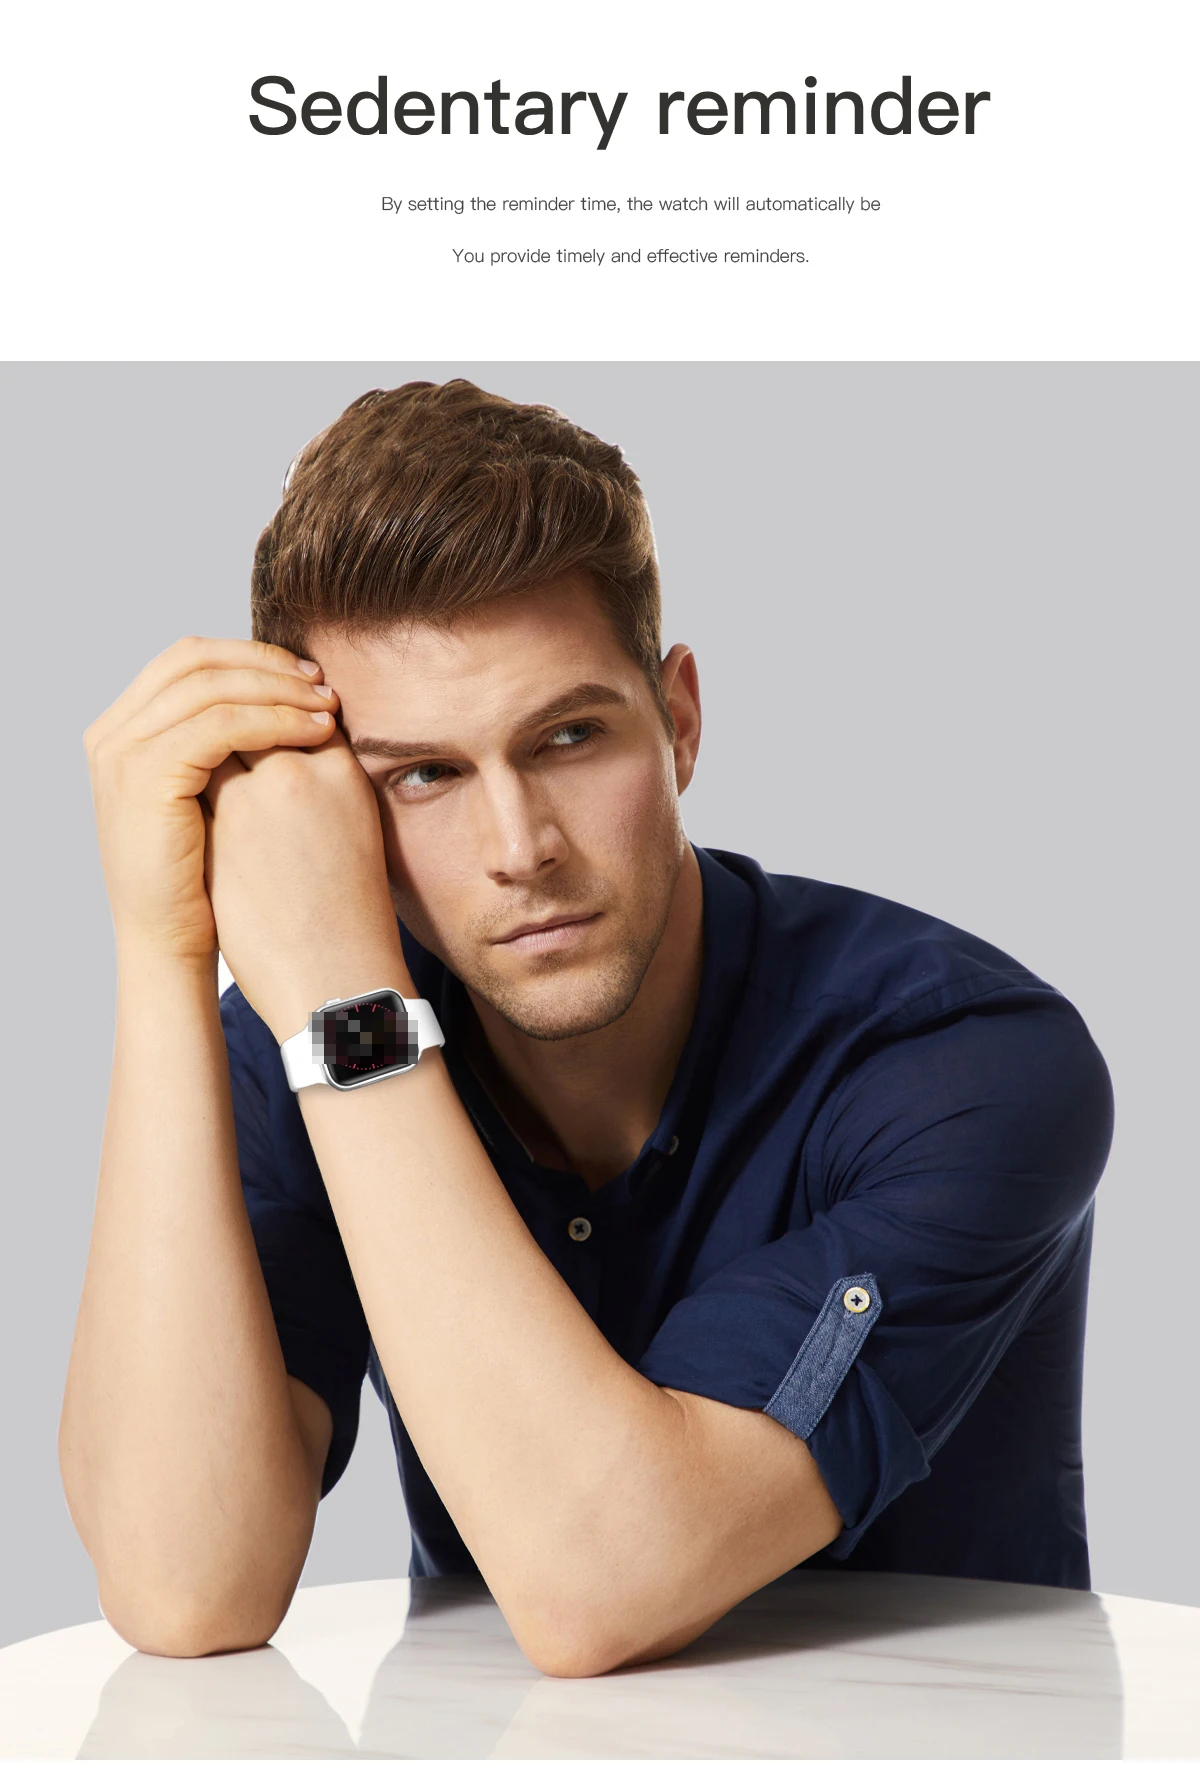 Iwo 11 Смарт часы 1:1 Человек gps сердечного ритма Bluetooth Smartwatch 44 мм для Apple iOS Android телефон PK IWO 10 IWO 8 Plus мужские часы